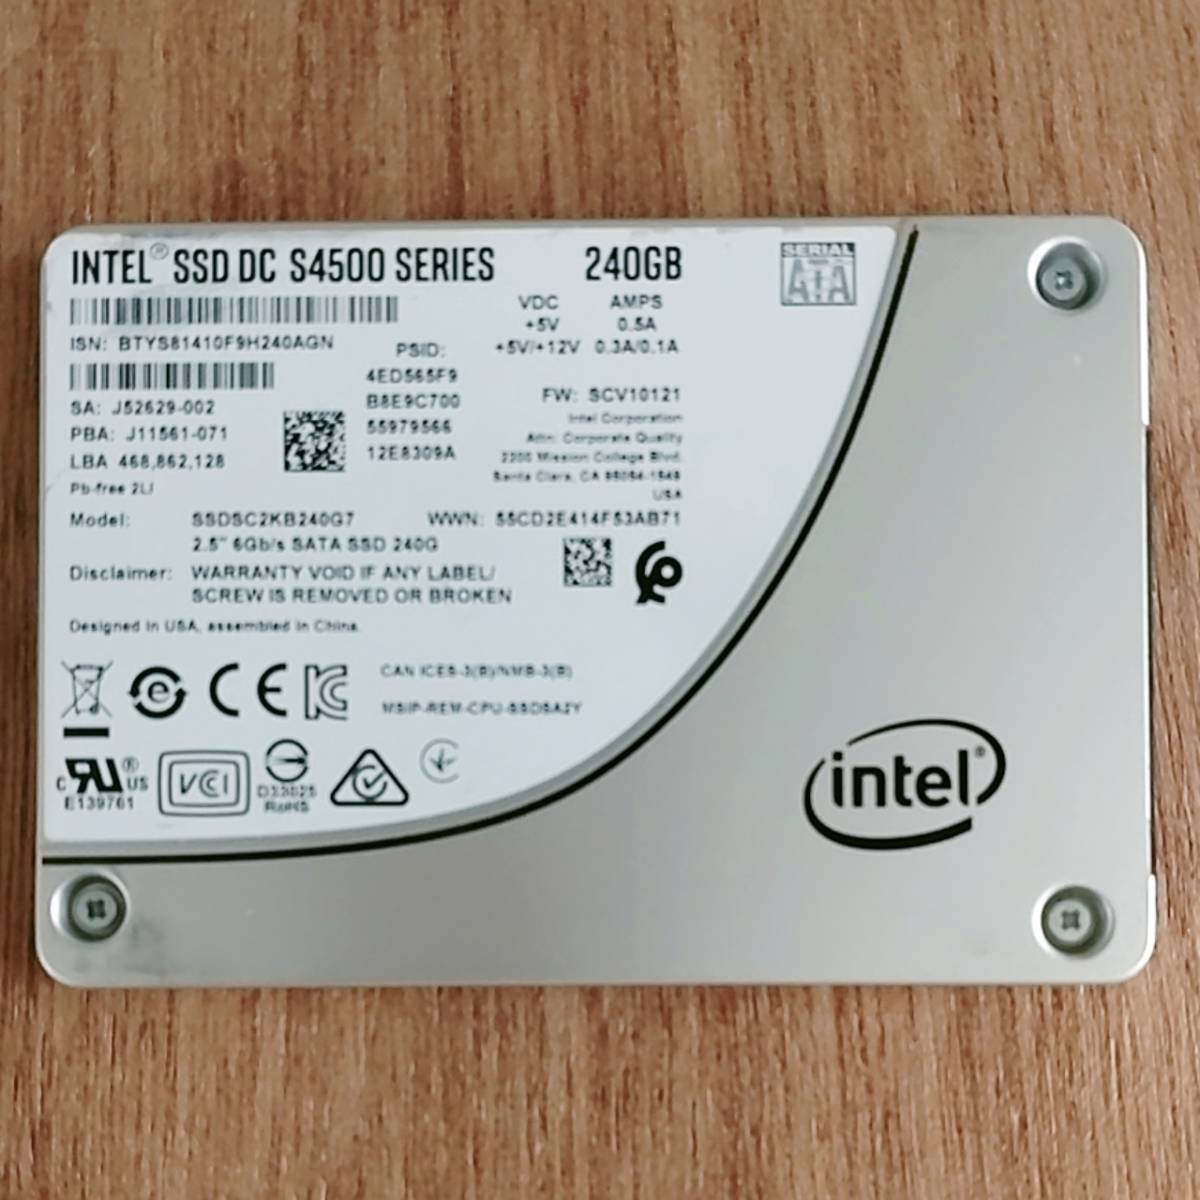 Intel SSD DC S4500 SERIES 240GB